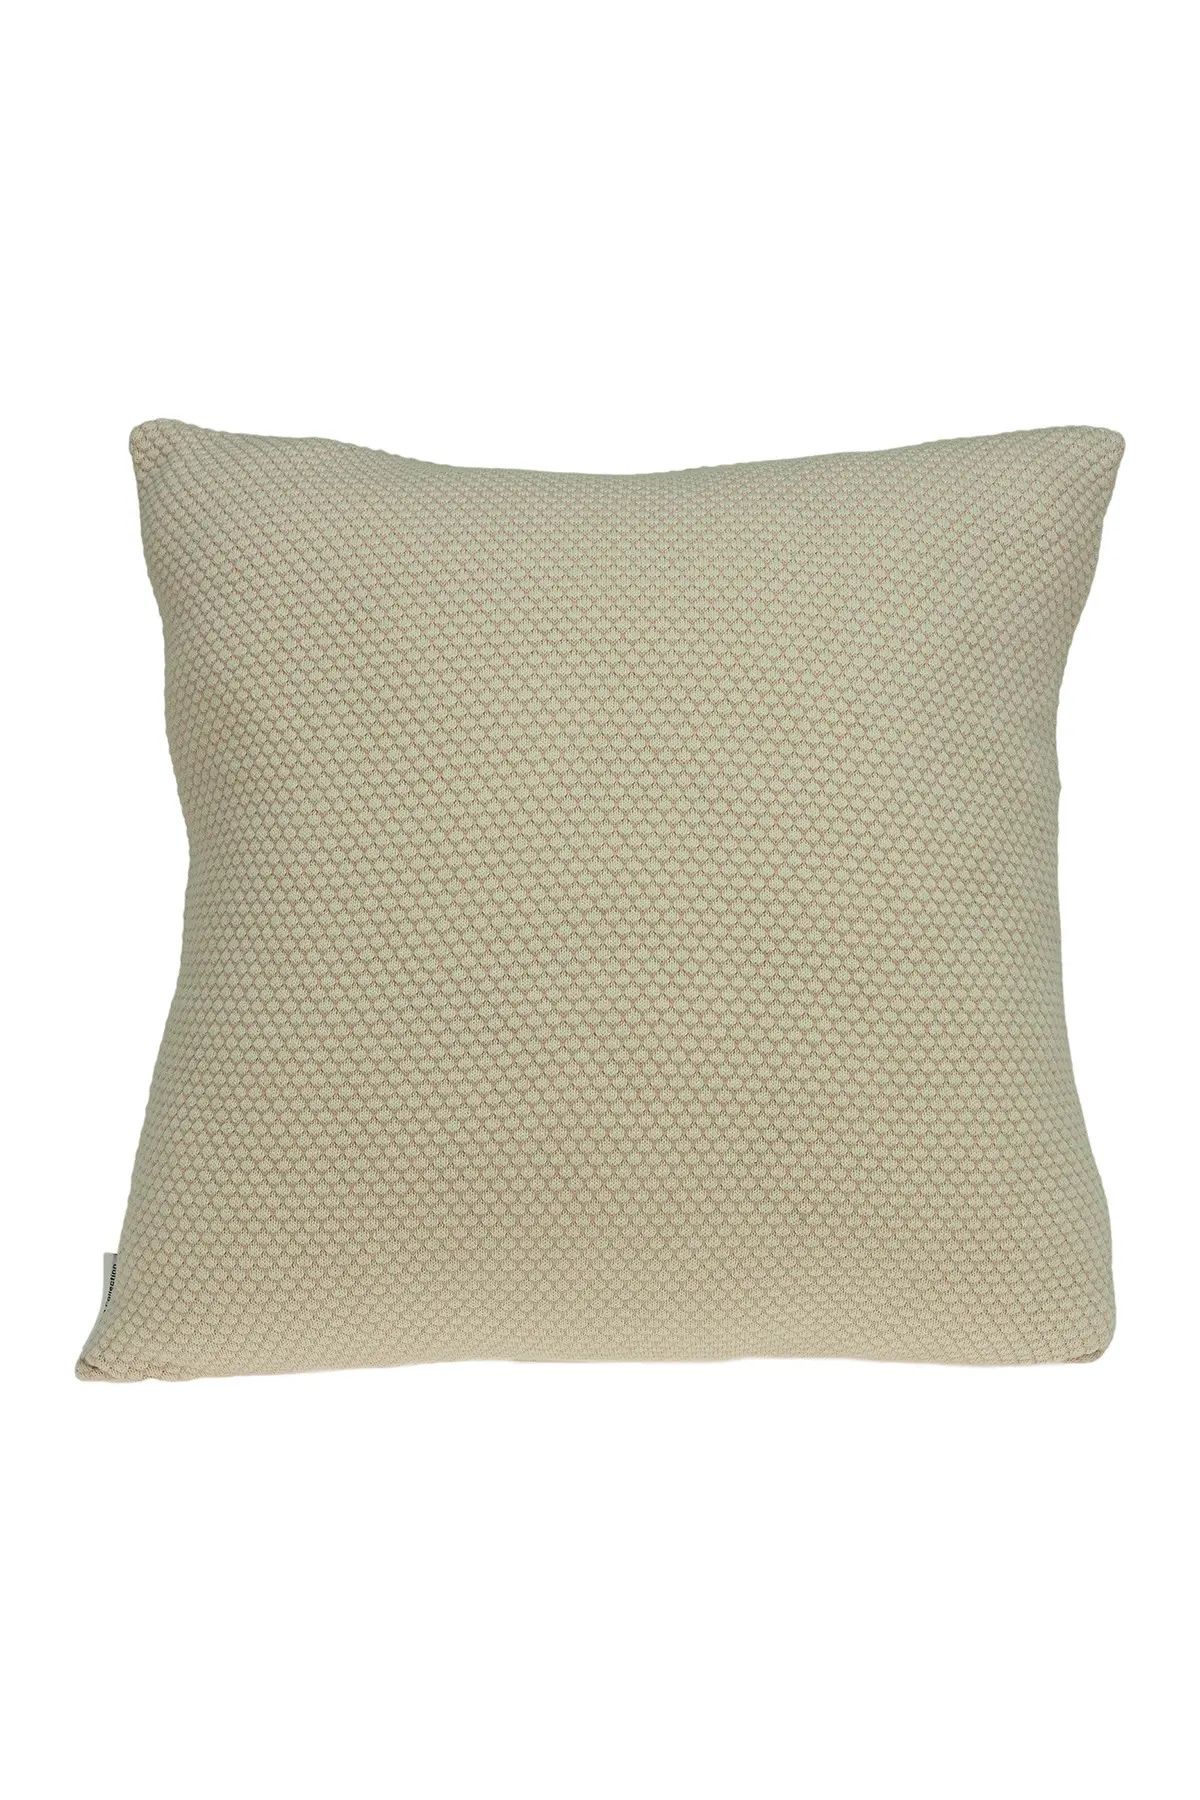 Parkland Collection Cassi Transitional Pillow - 20" x 20" - Tan at Nordstrom Rack | Hautelook